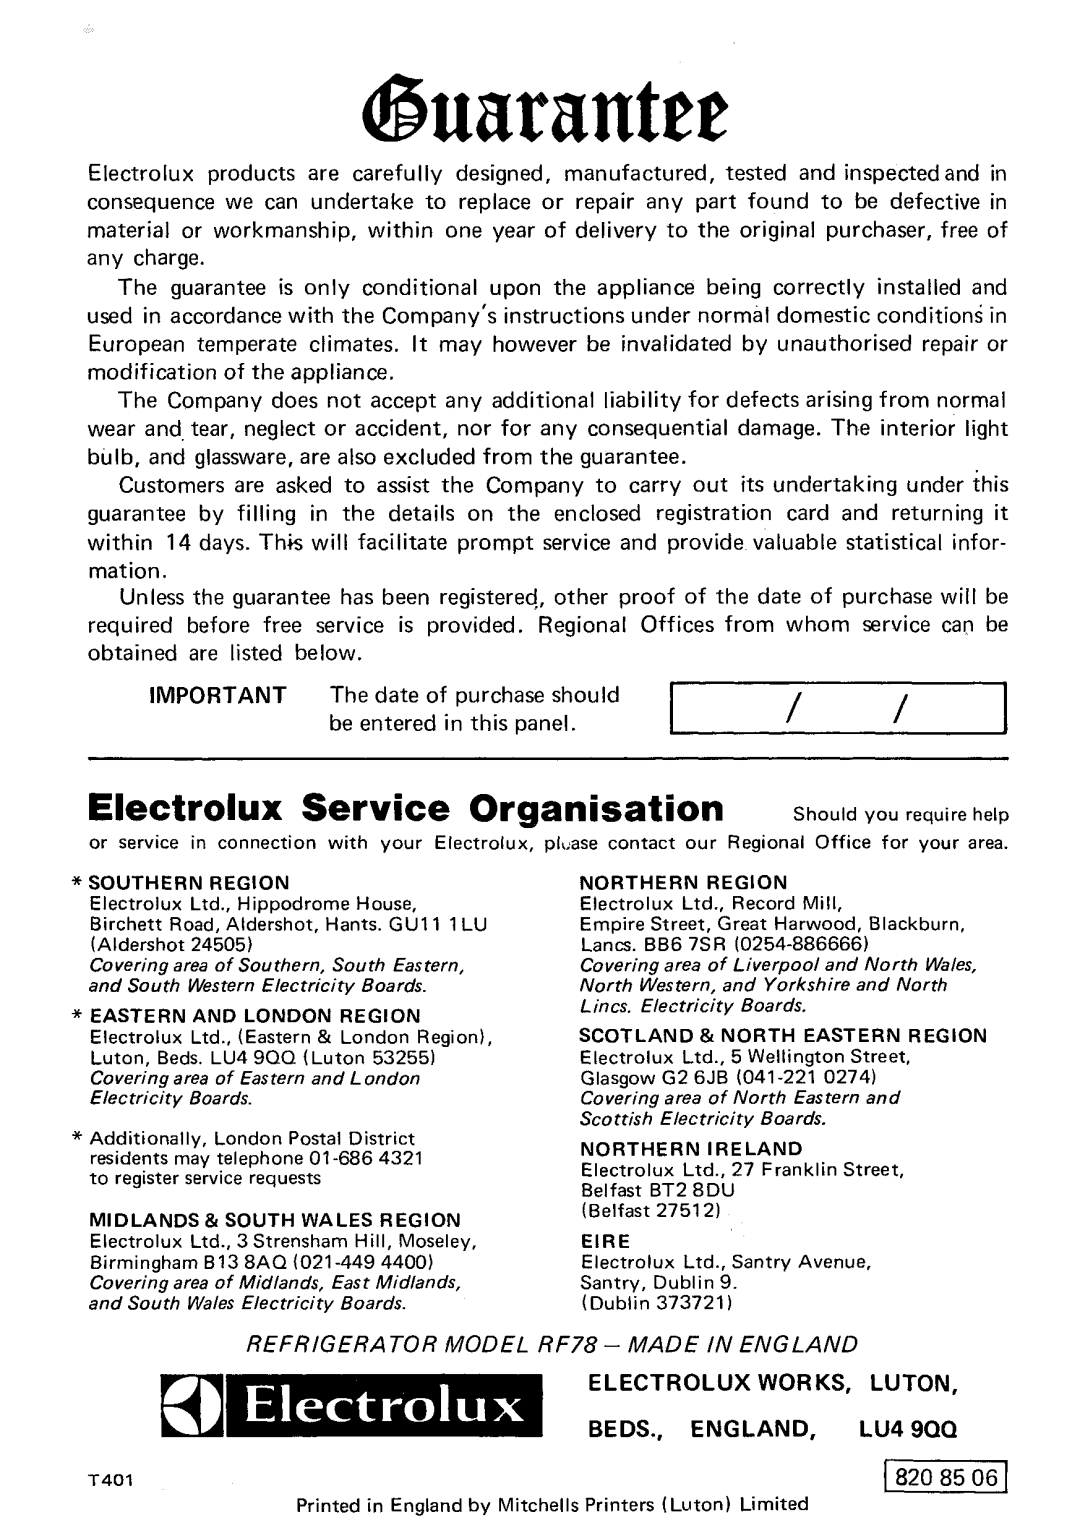 Electrolux RF78 manual 